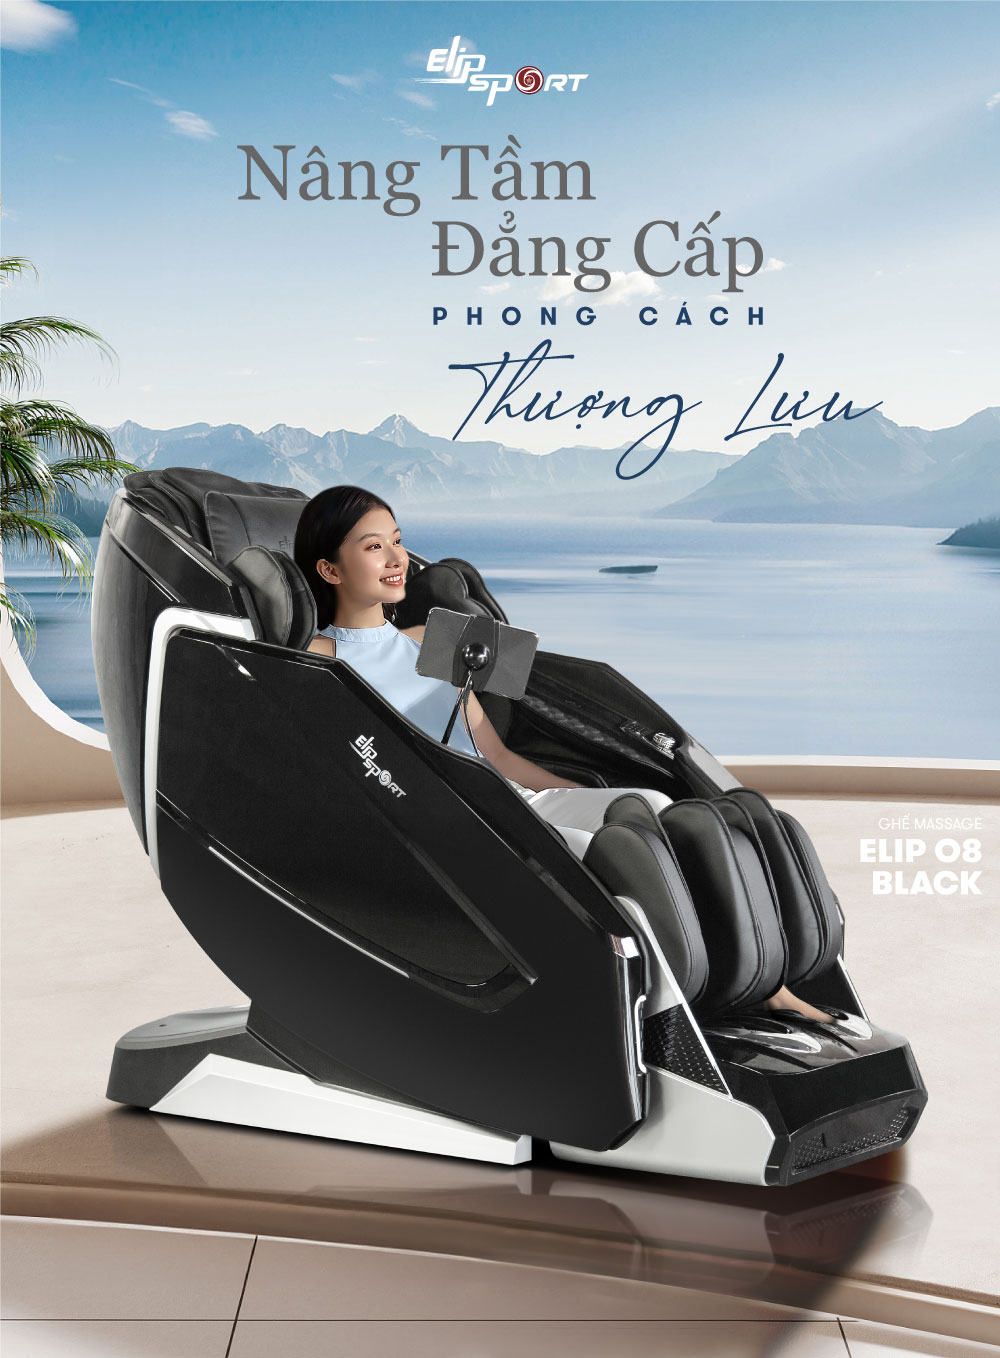 ghế massage elip o8 black 